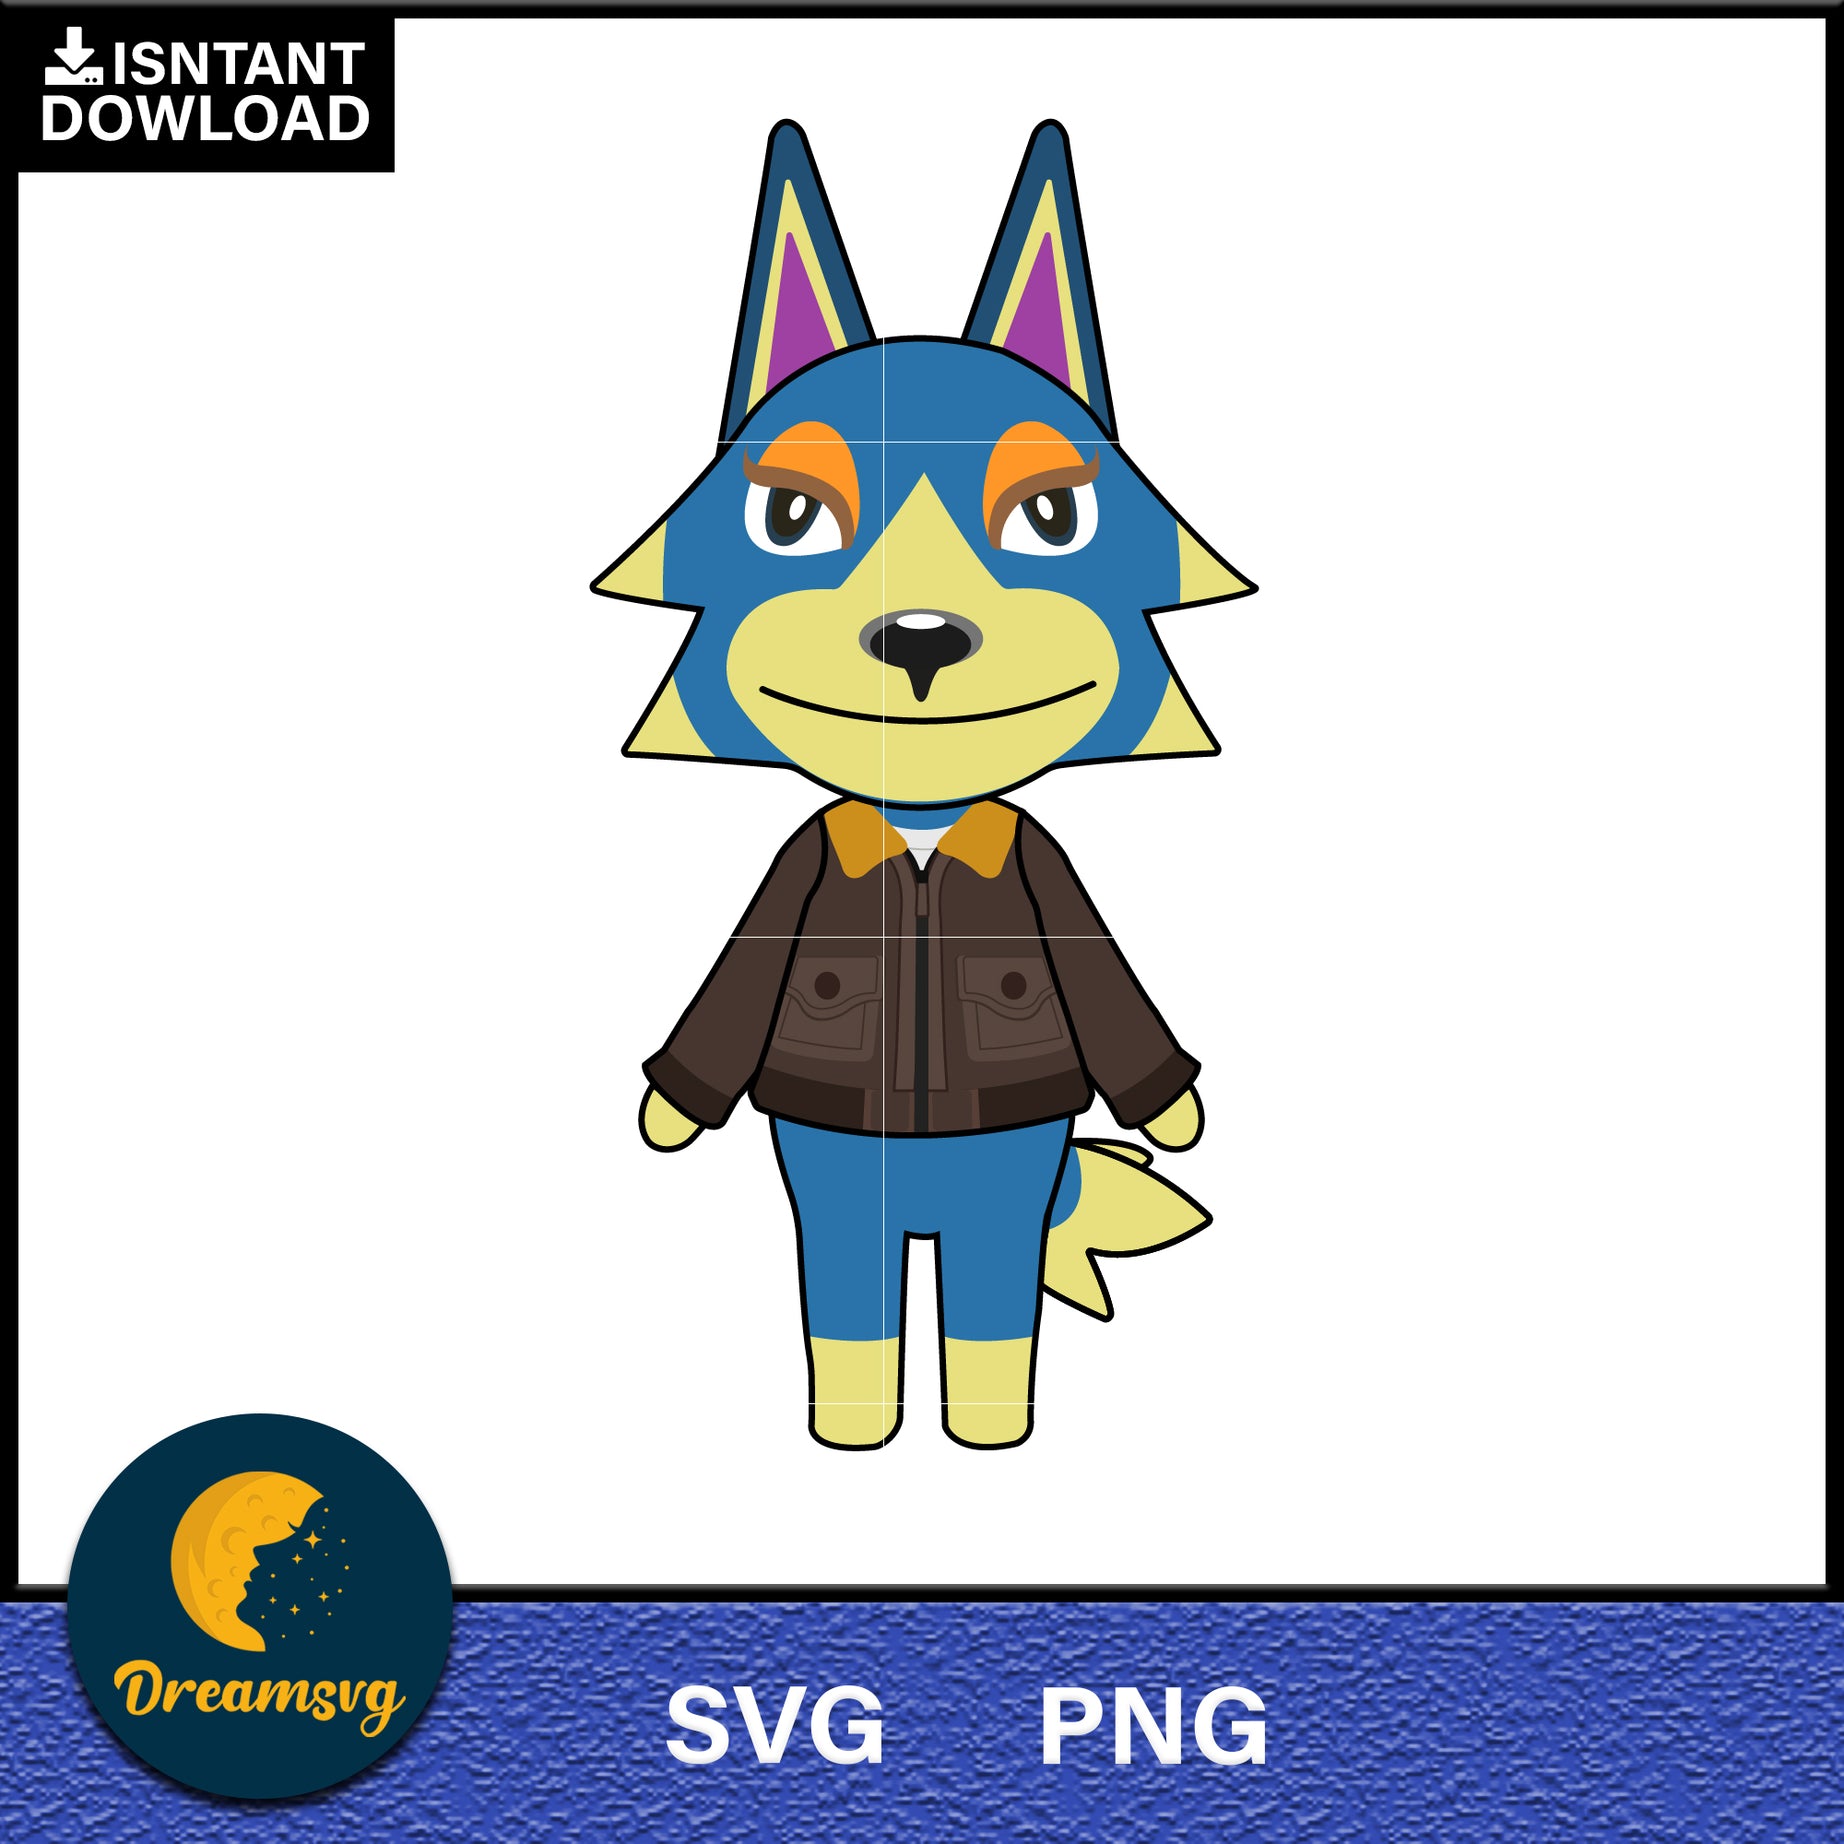 Wolfgang Animal Crossing Svg, Animal Crossing Svg, Animal Crossing Png, Cartoon svg, svg, png digital file